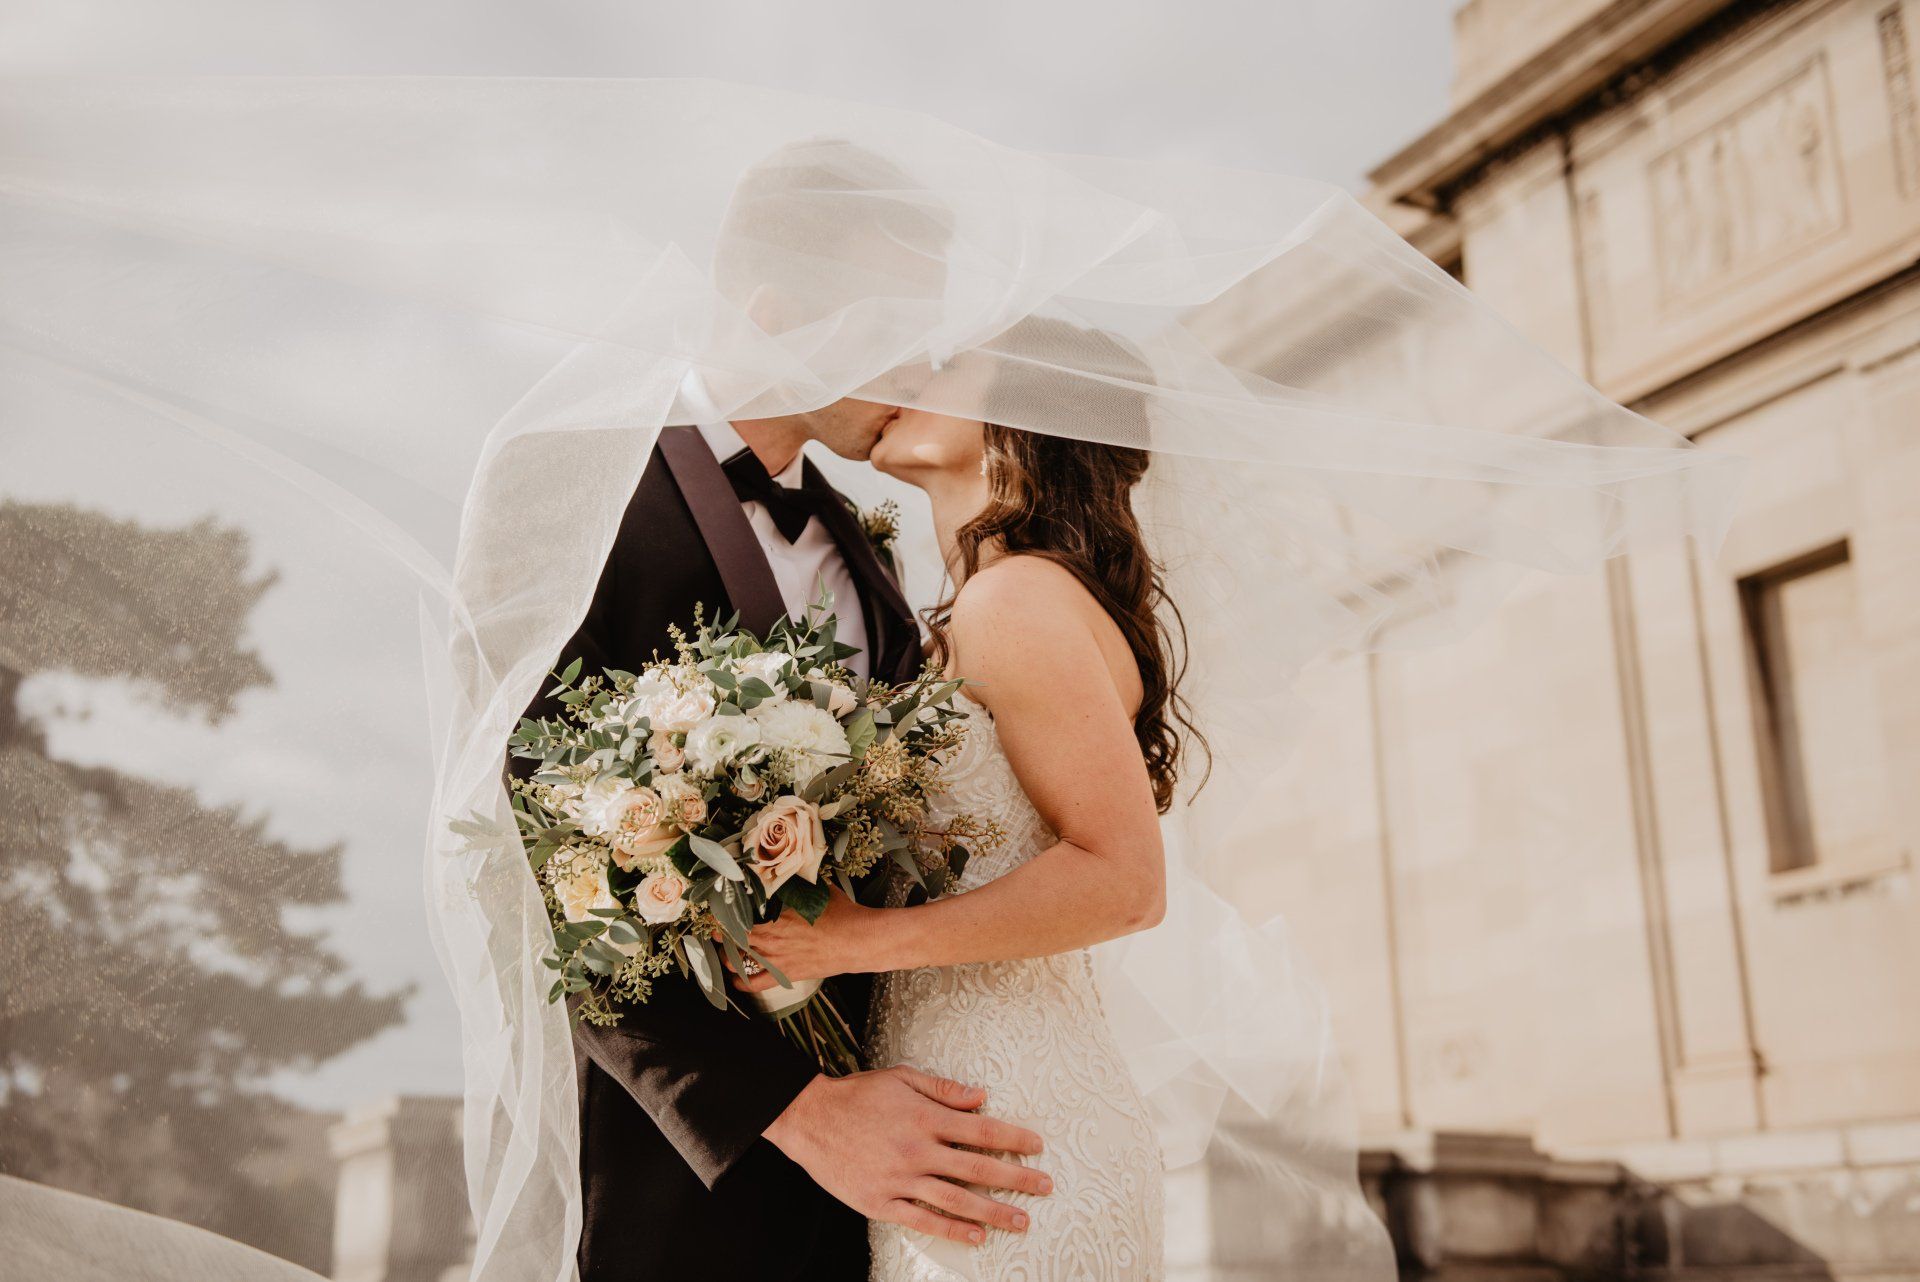 Budget-Friendly Wedding Inspiration: 5 Affordable Ideas